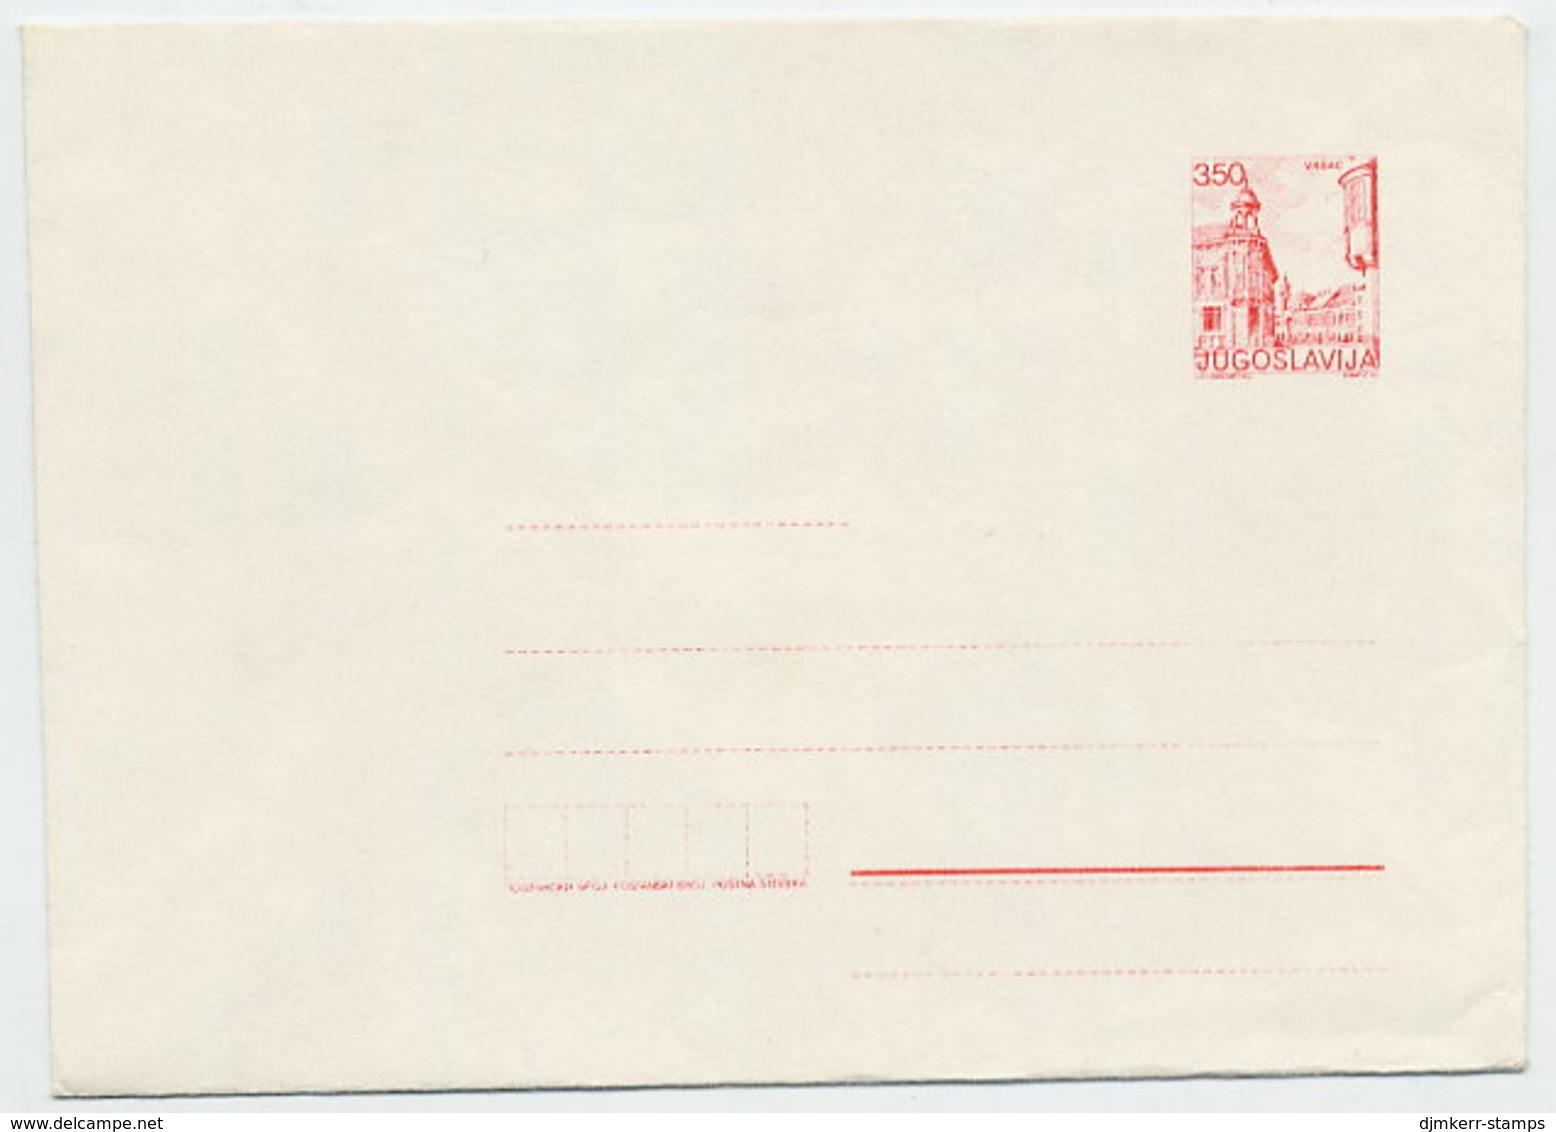 YUGOSLAVIA 1981 Tourism 3.50 D. Envelope, Unused. Michel U63 - Postal Stationery